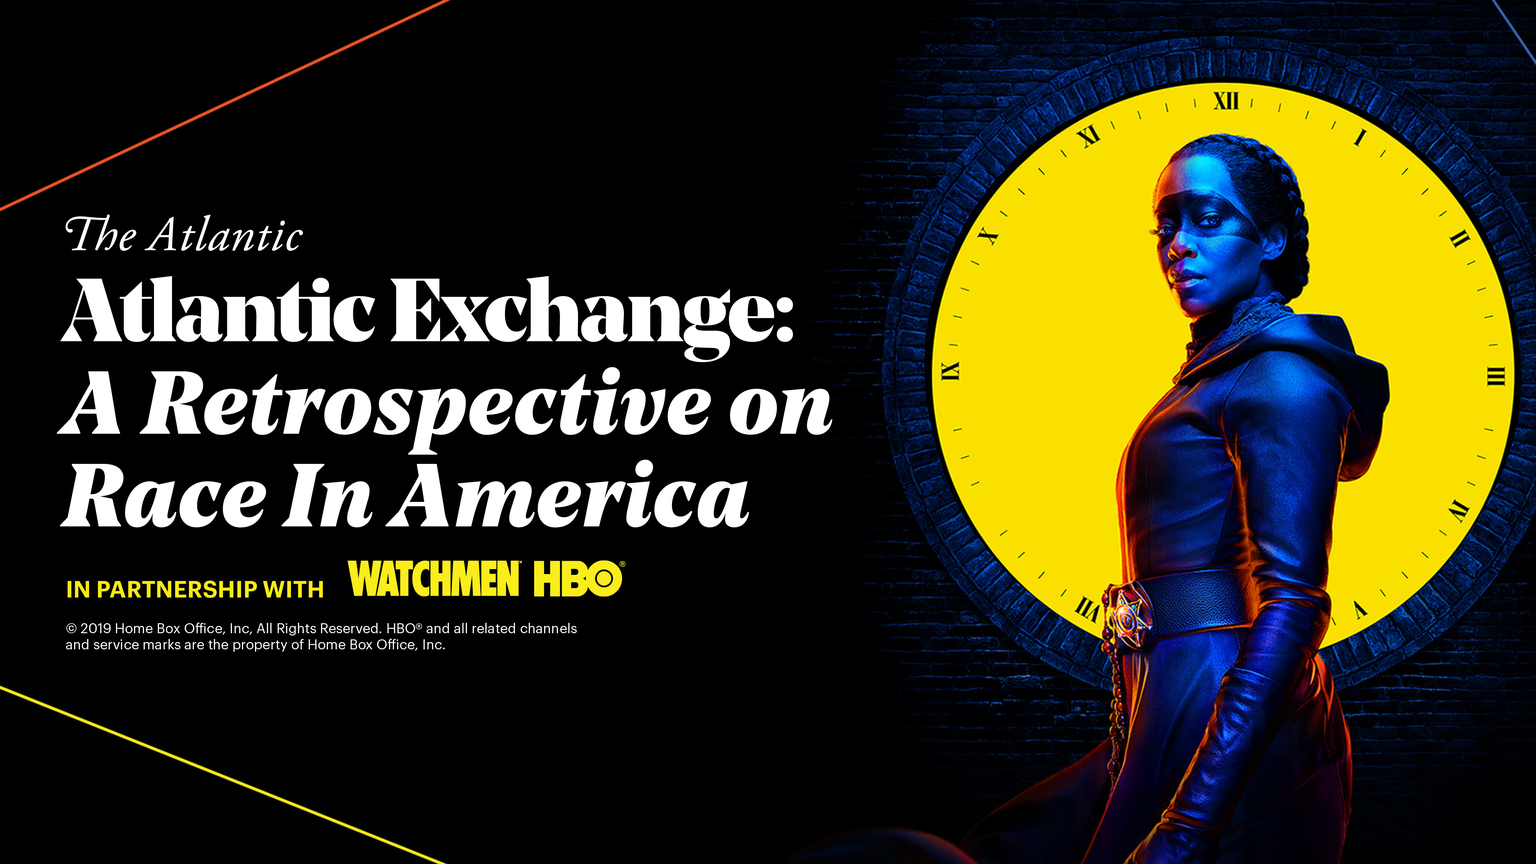 Atlantic Exchange: A Retrospective on Race in America
